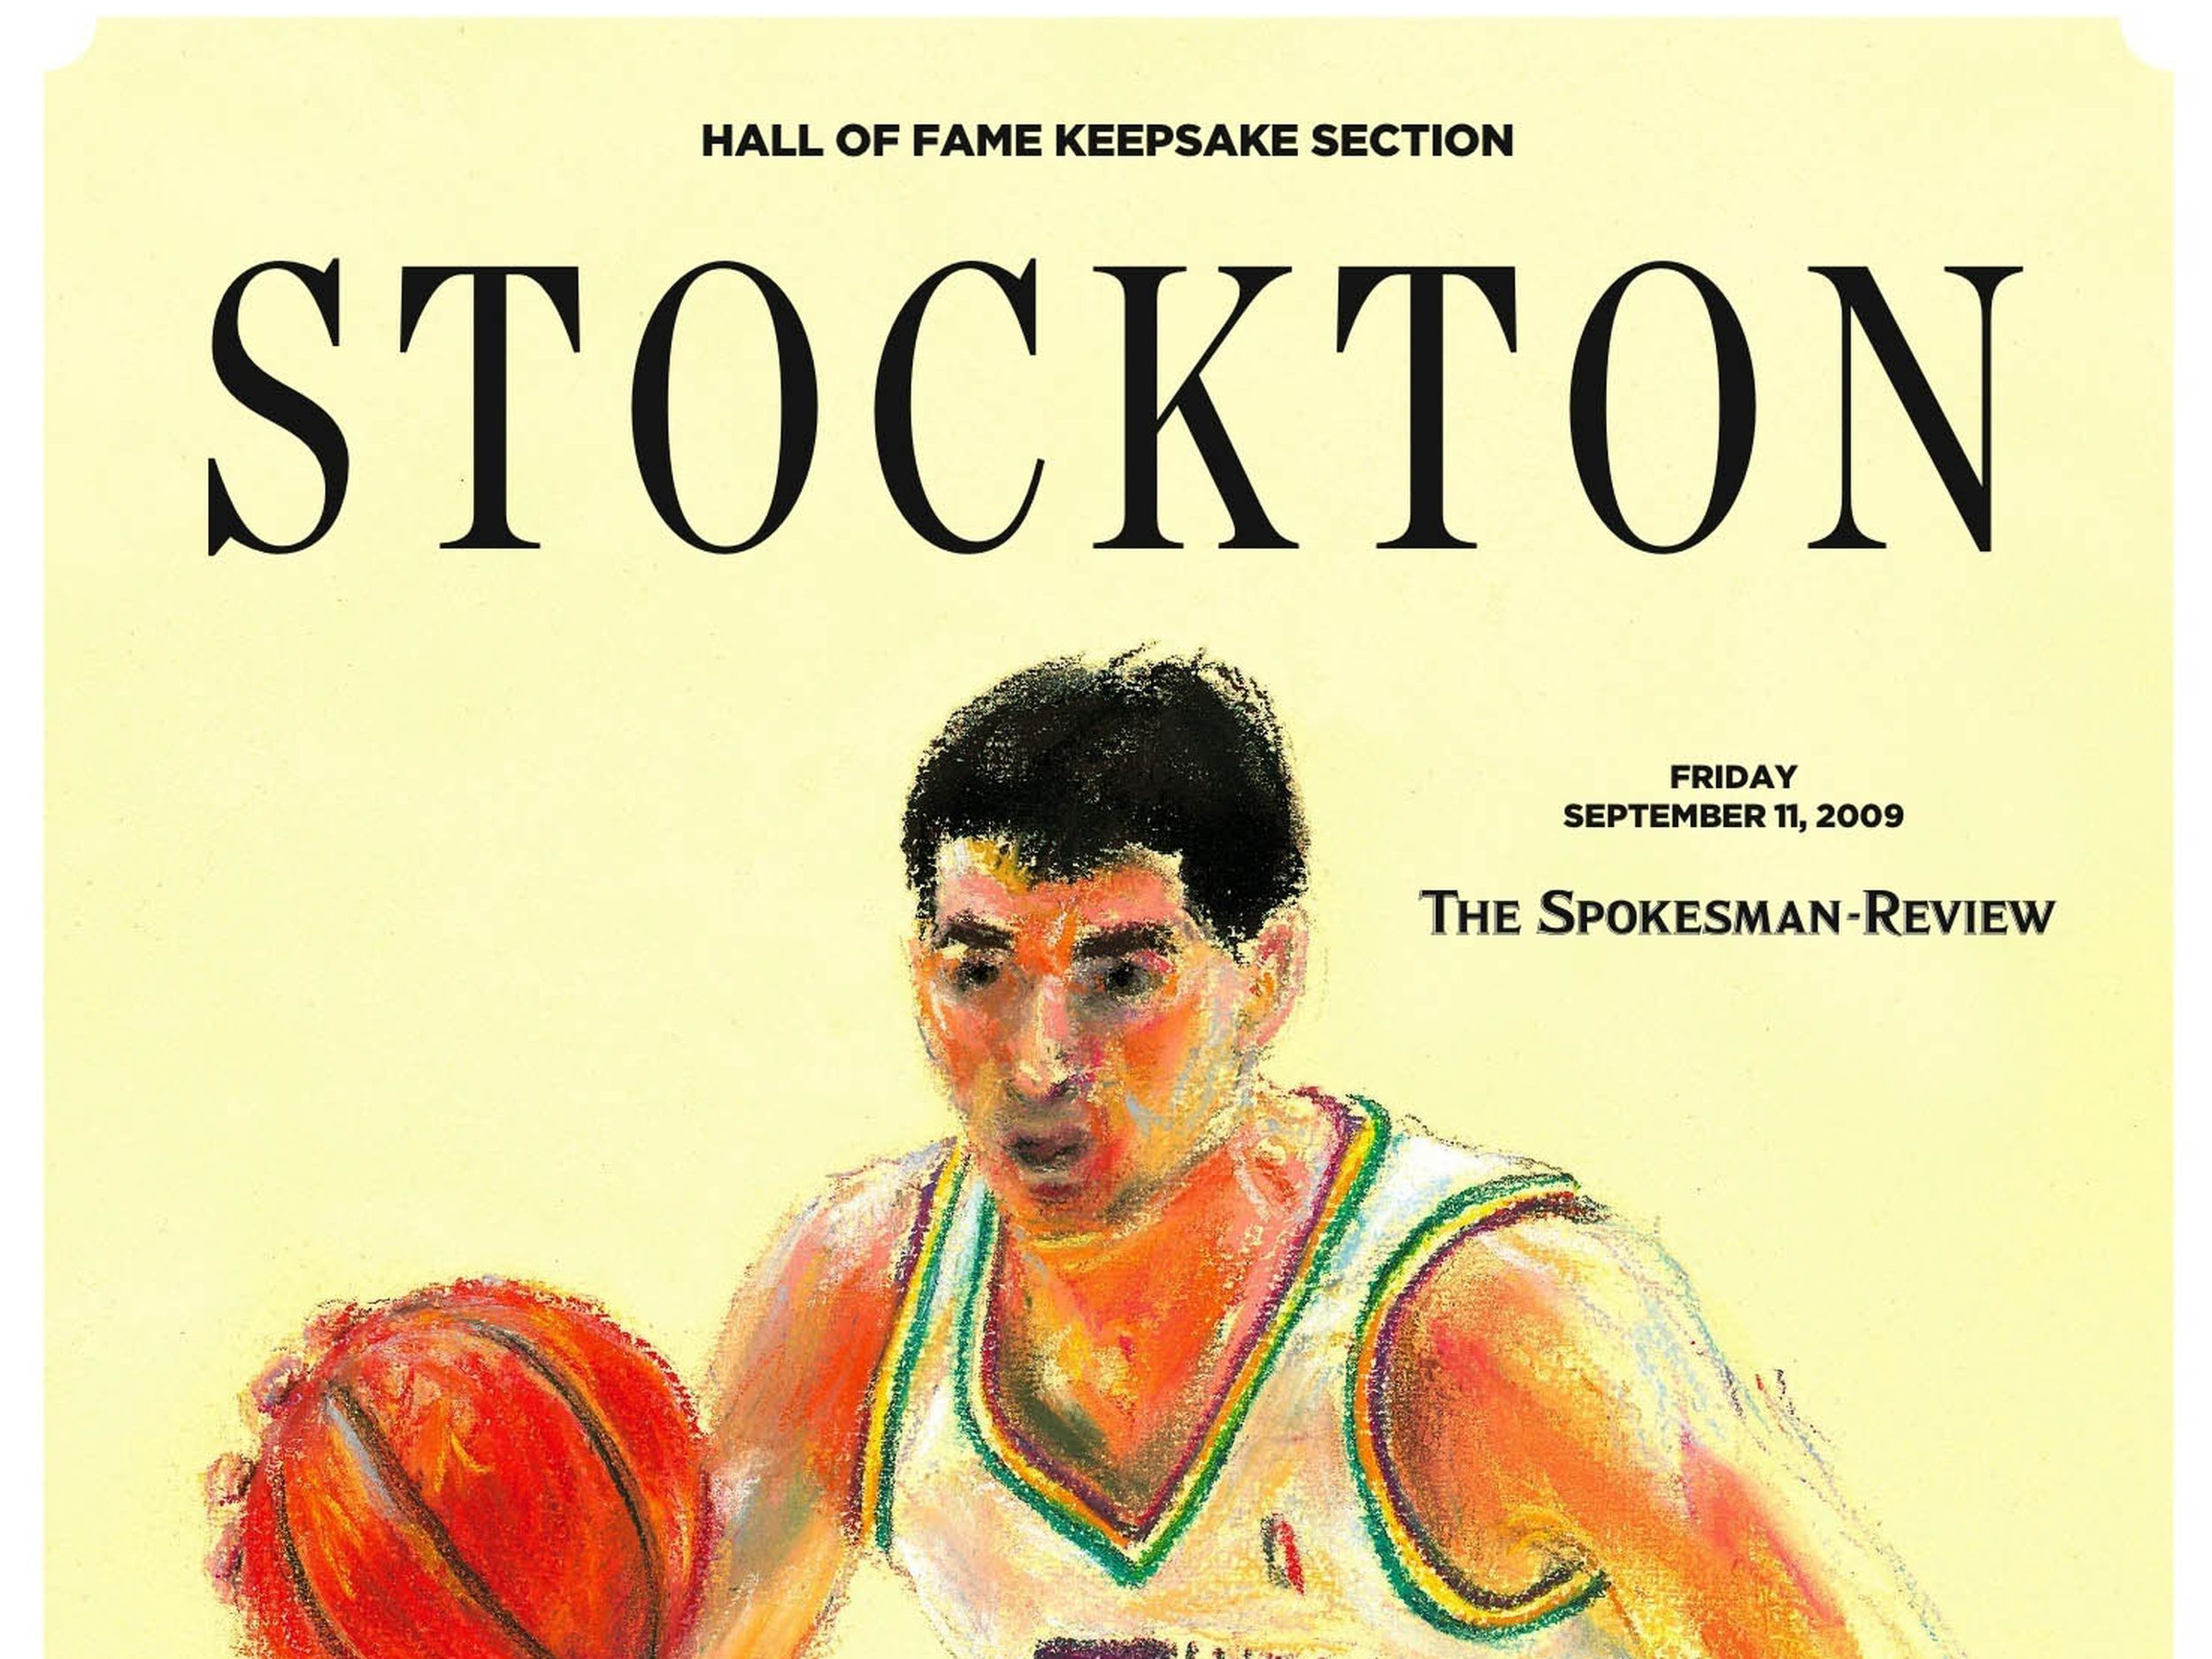 Utah Jazz: John Stockton and the 'short shorts' saga